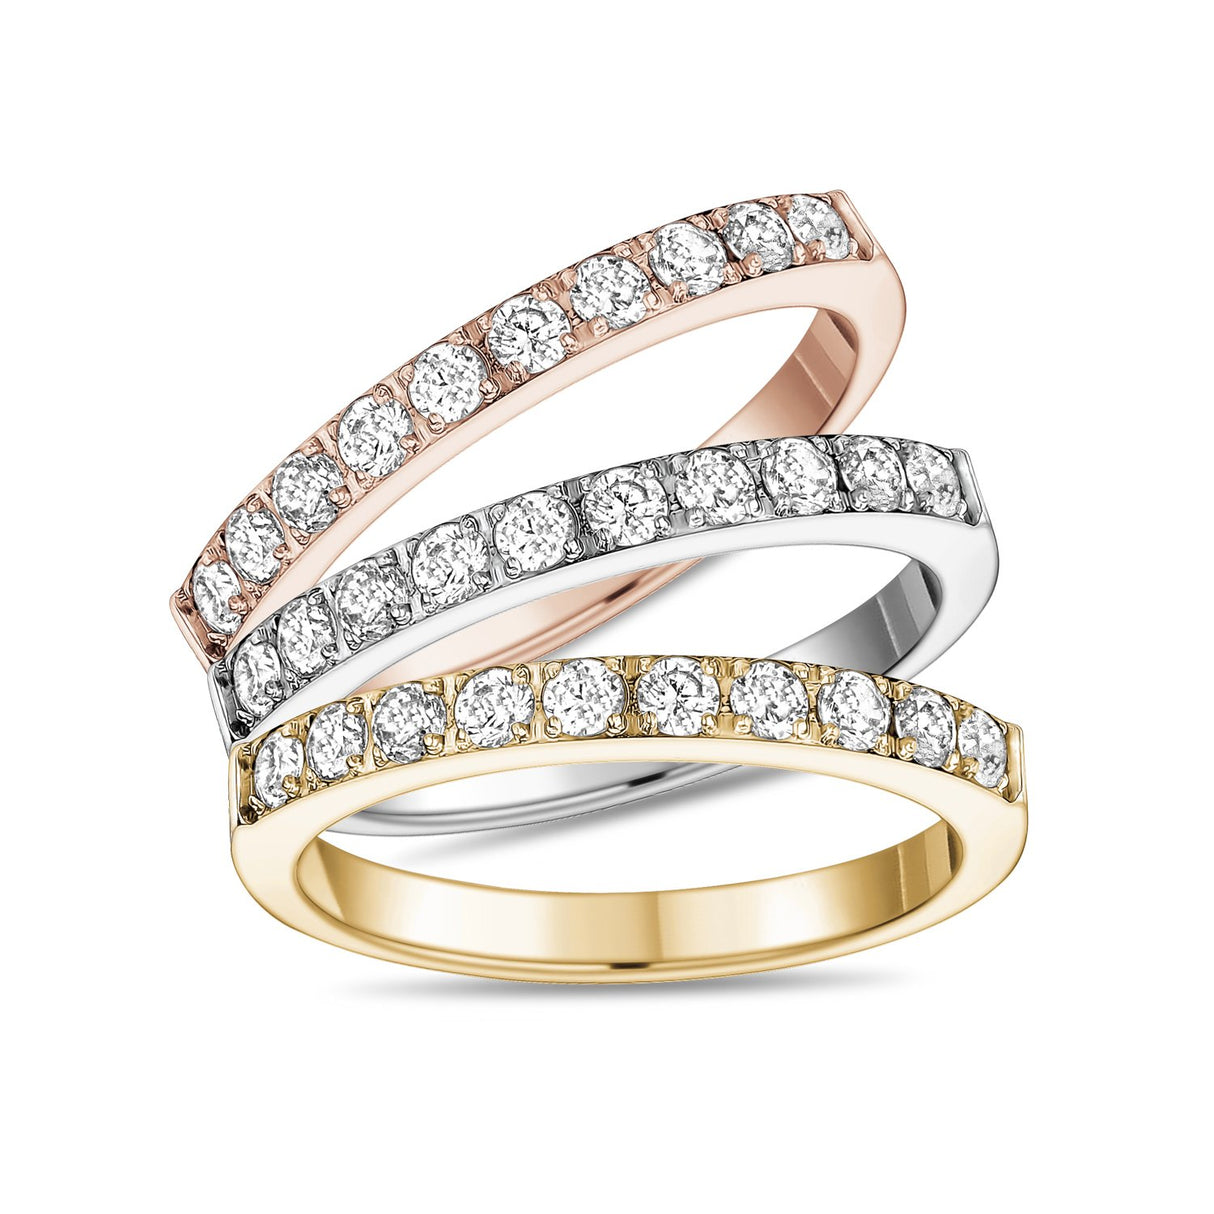 Frauen Ring - Tri Farbe Stahl Hälfte Ewigkeit stapelbar Ringe